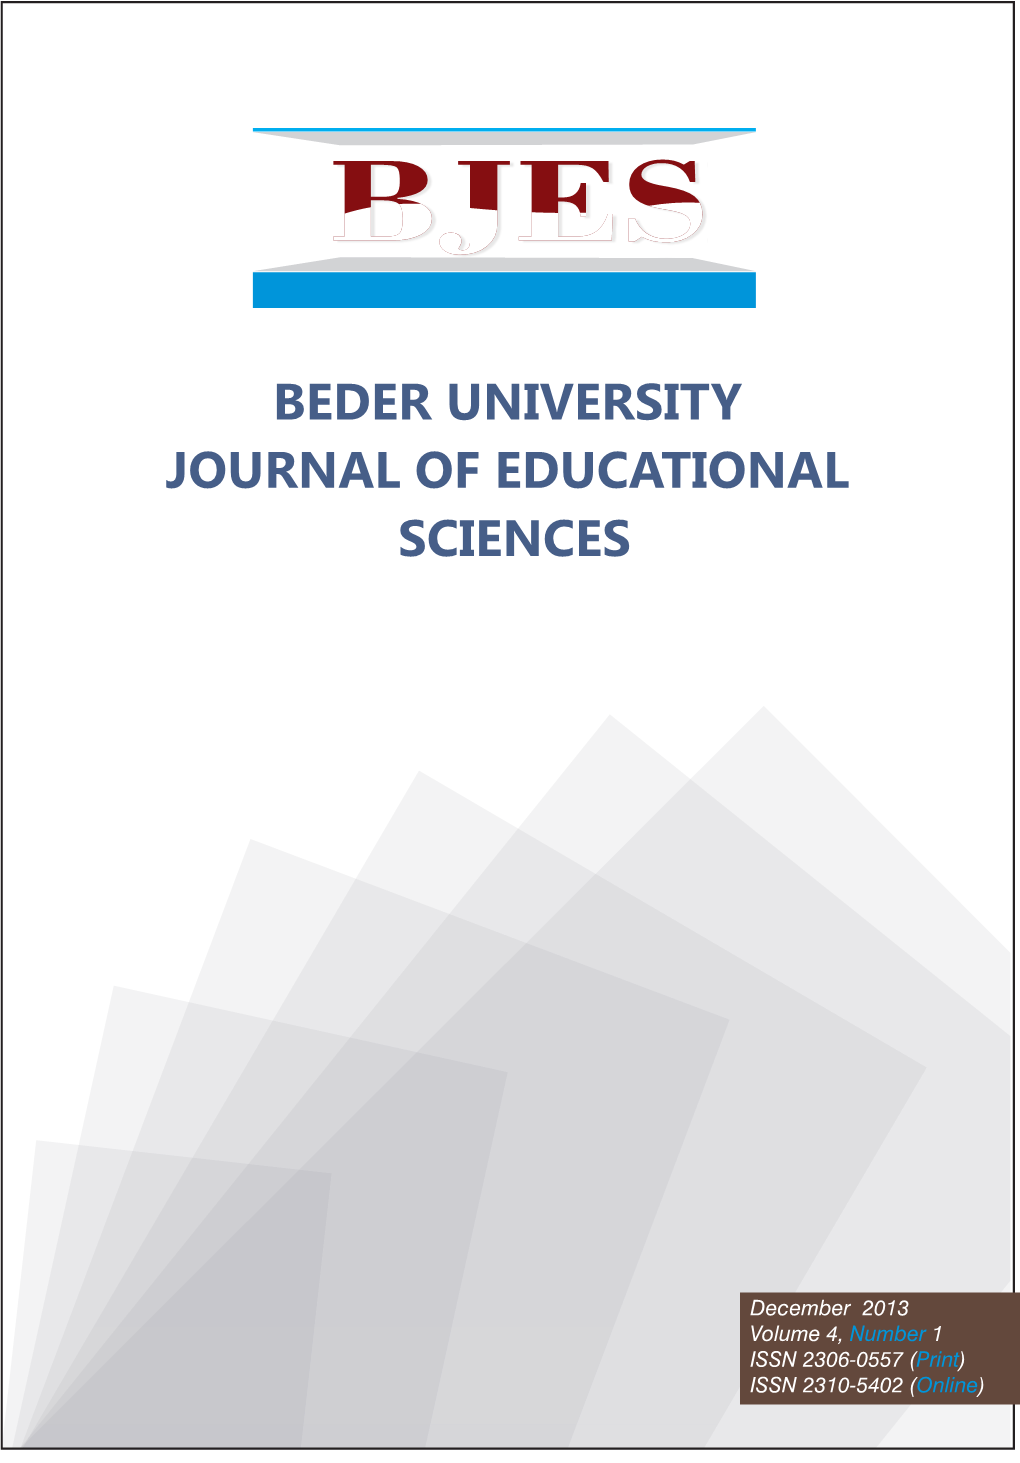 Beder University Journal of Educational Sciences